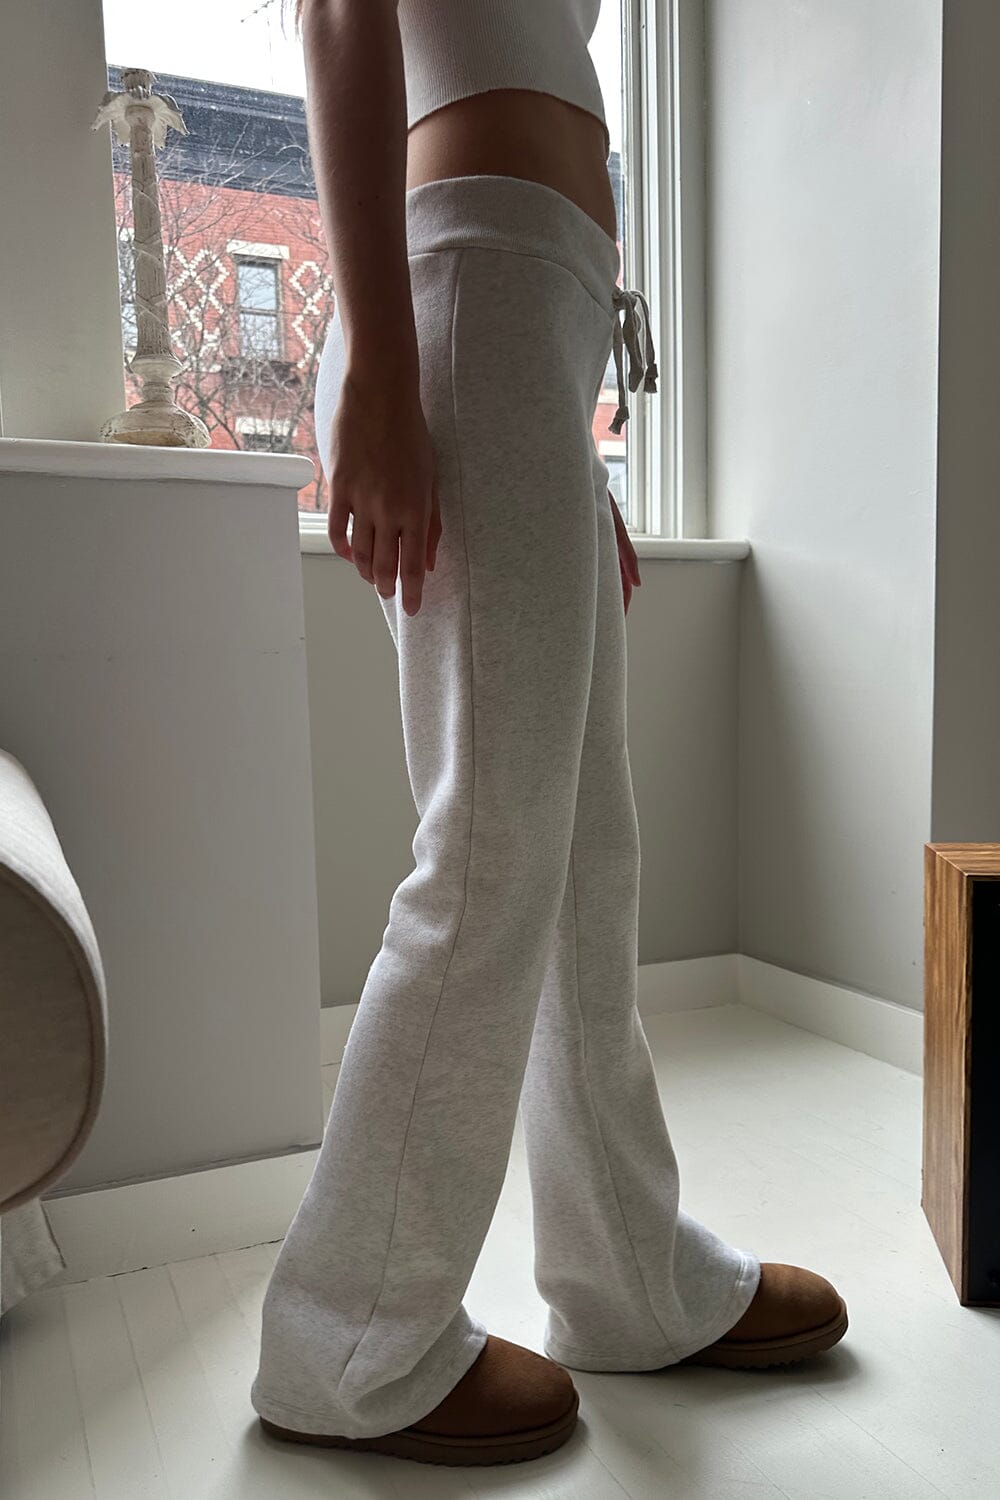 Wweixi Polyester Yoga Sports Pants Women Low Waist Loose Leggings